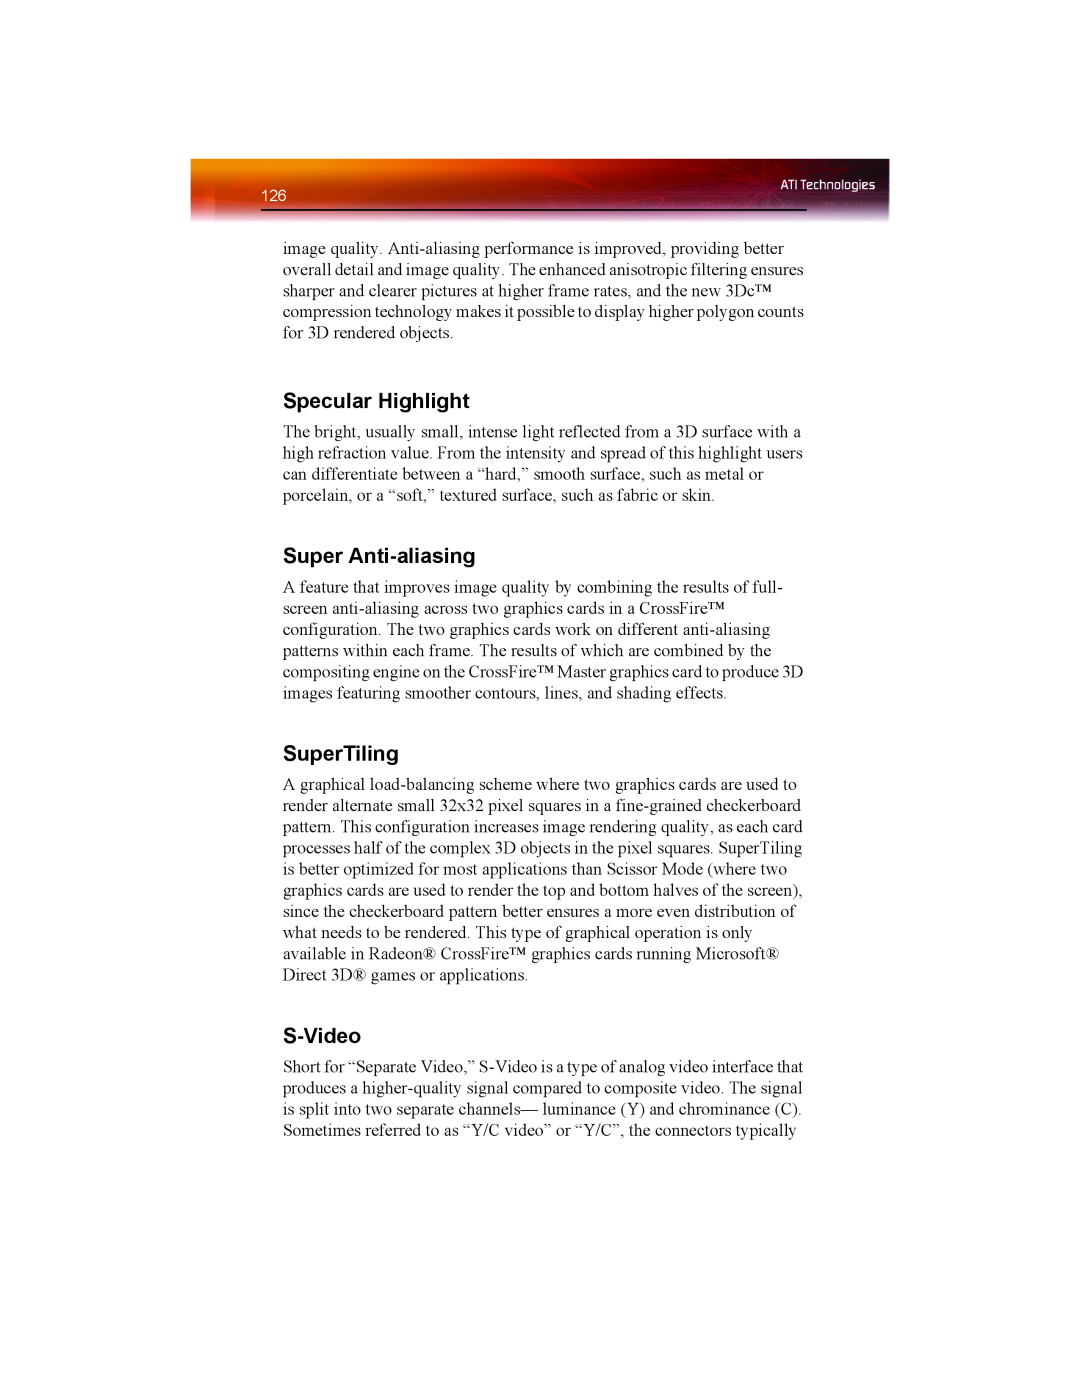 ATI Technologies X1550 SERIES manual Specular Highlight, Super Anti-aliasing, SuperTiling, S-Video 